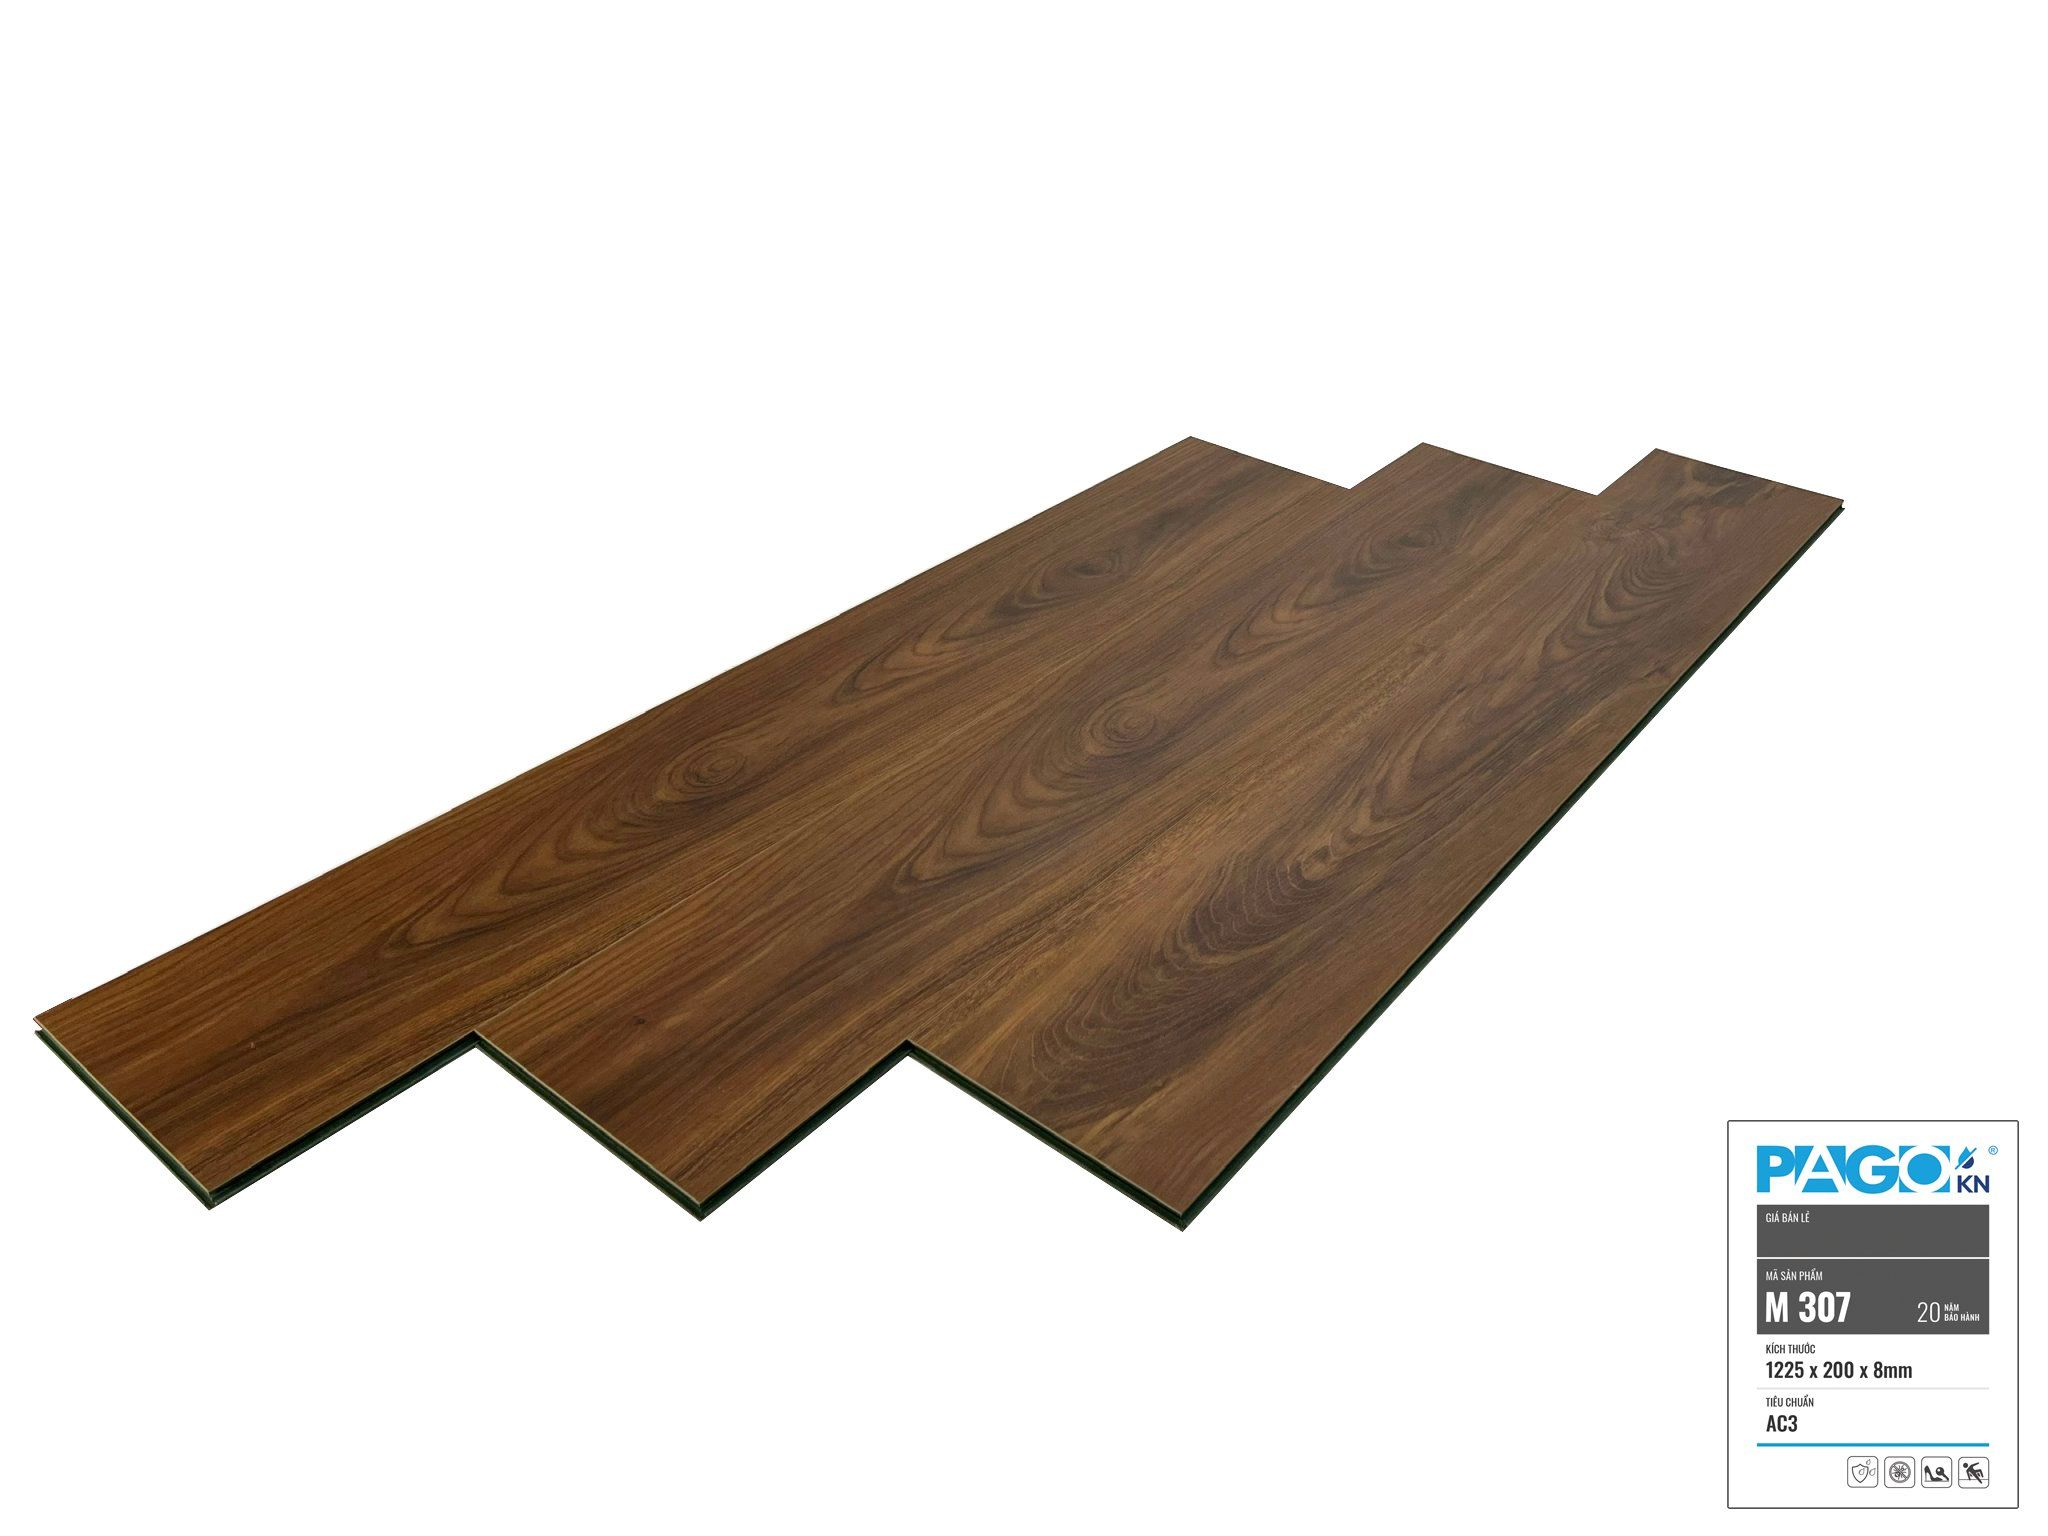  Sàn gỗ Pago – M307 